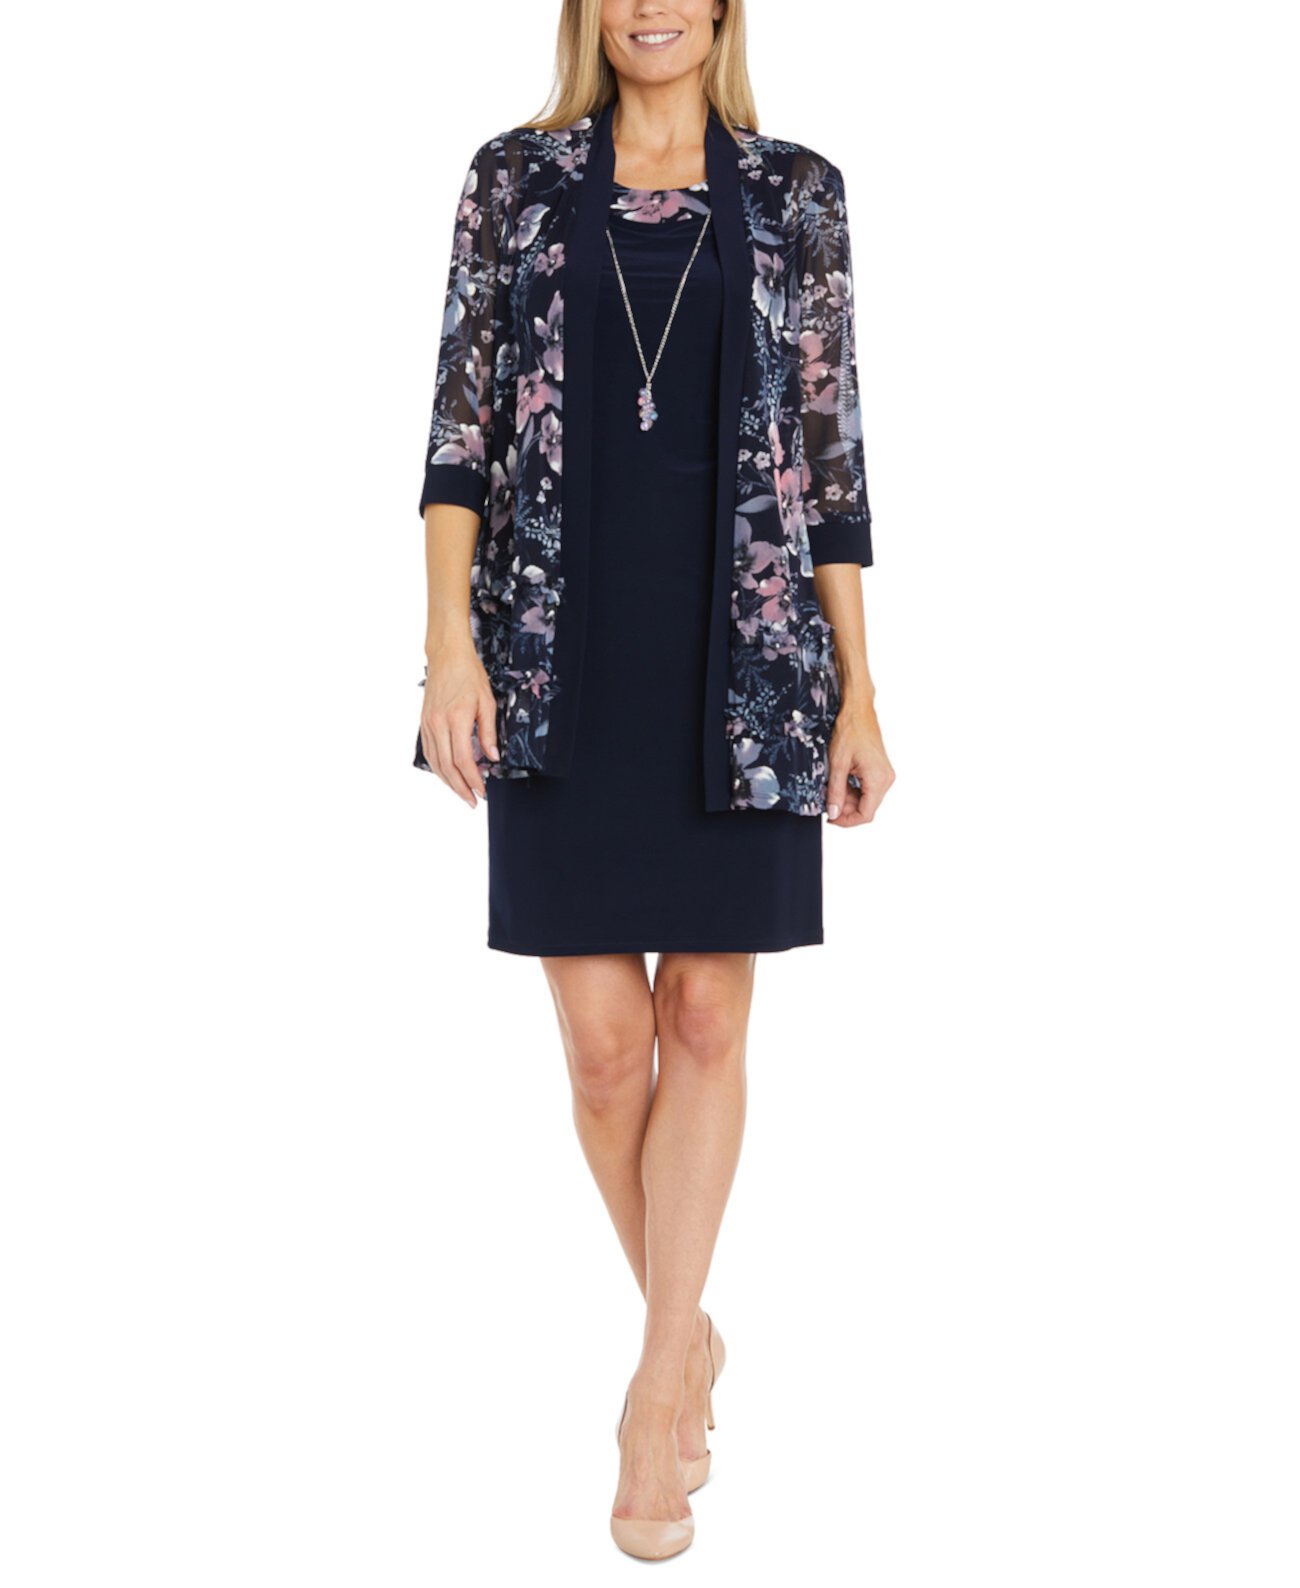 Petite Floral Mesh Jacket and Contrast-Trim Sleeveless Dress R & M Richards